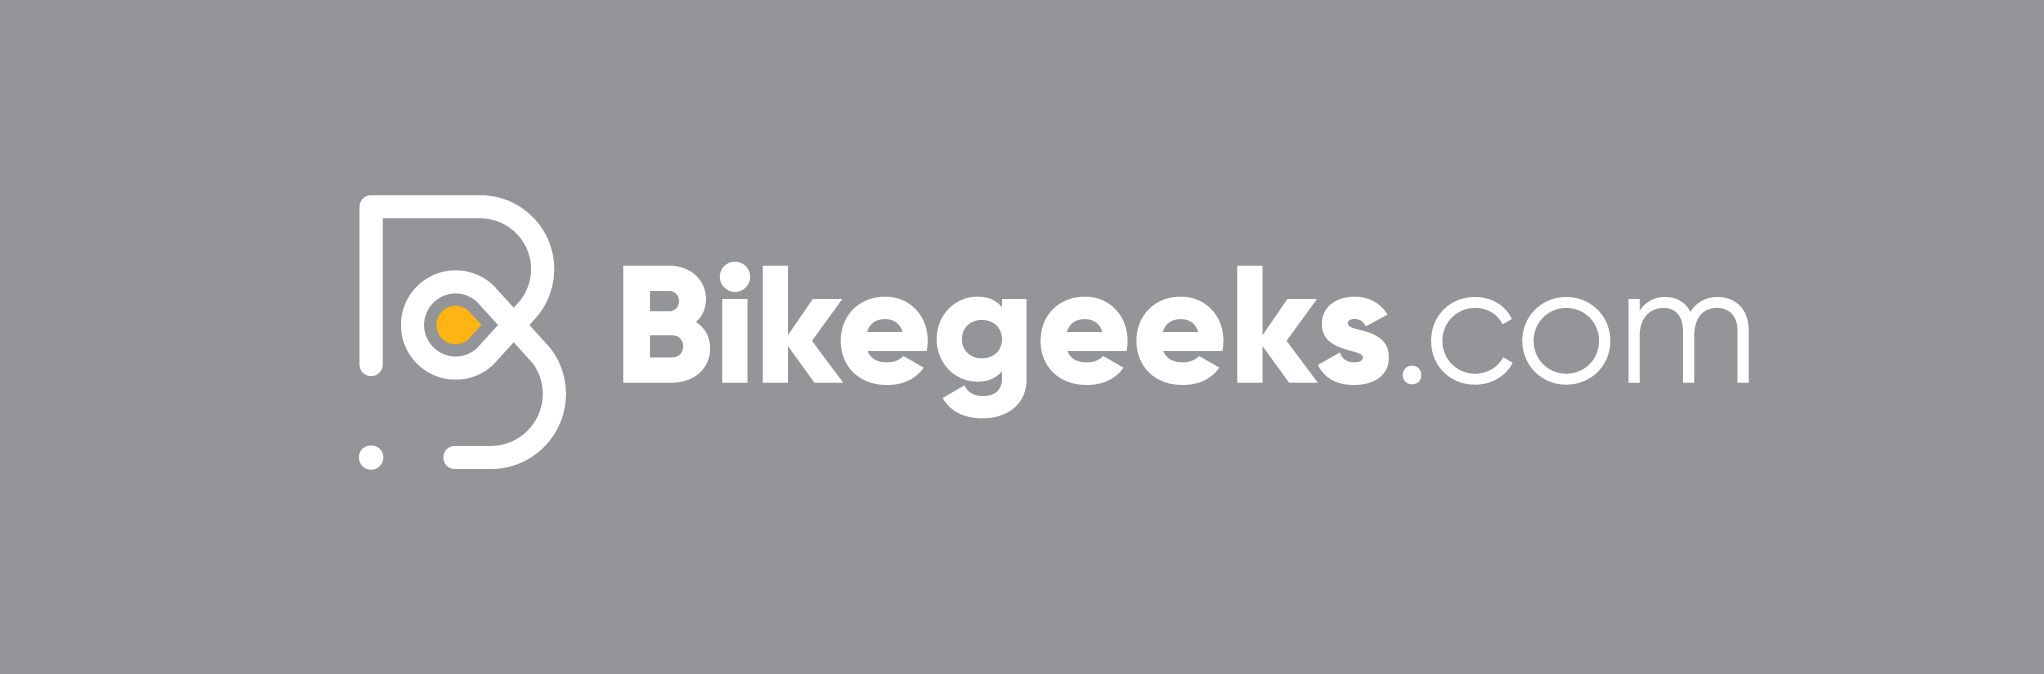 bike_geeks_logo_white_on_grey_guide.jpg